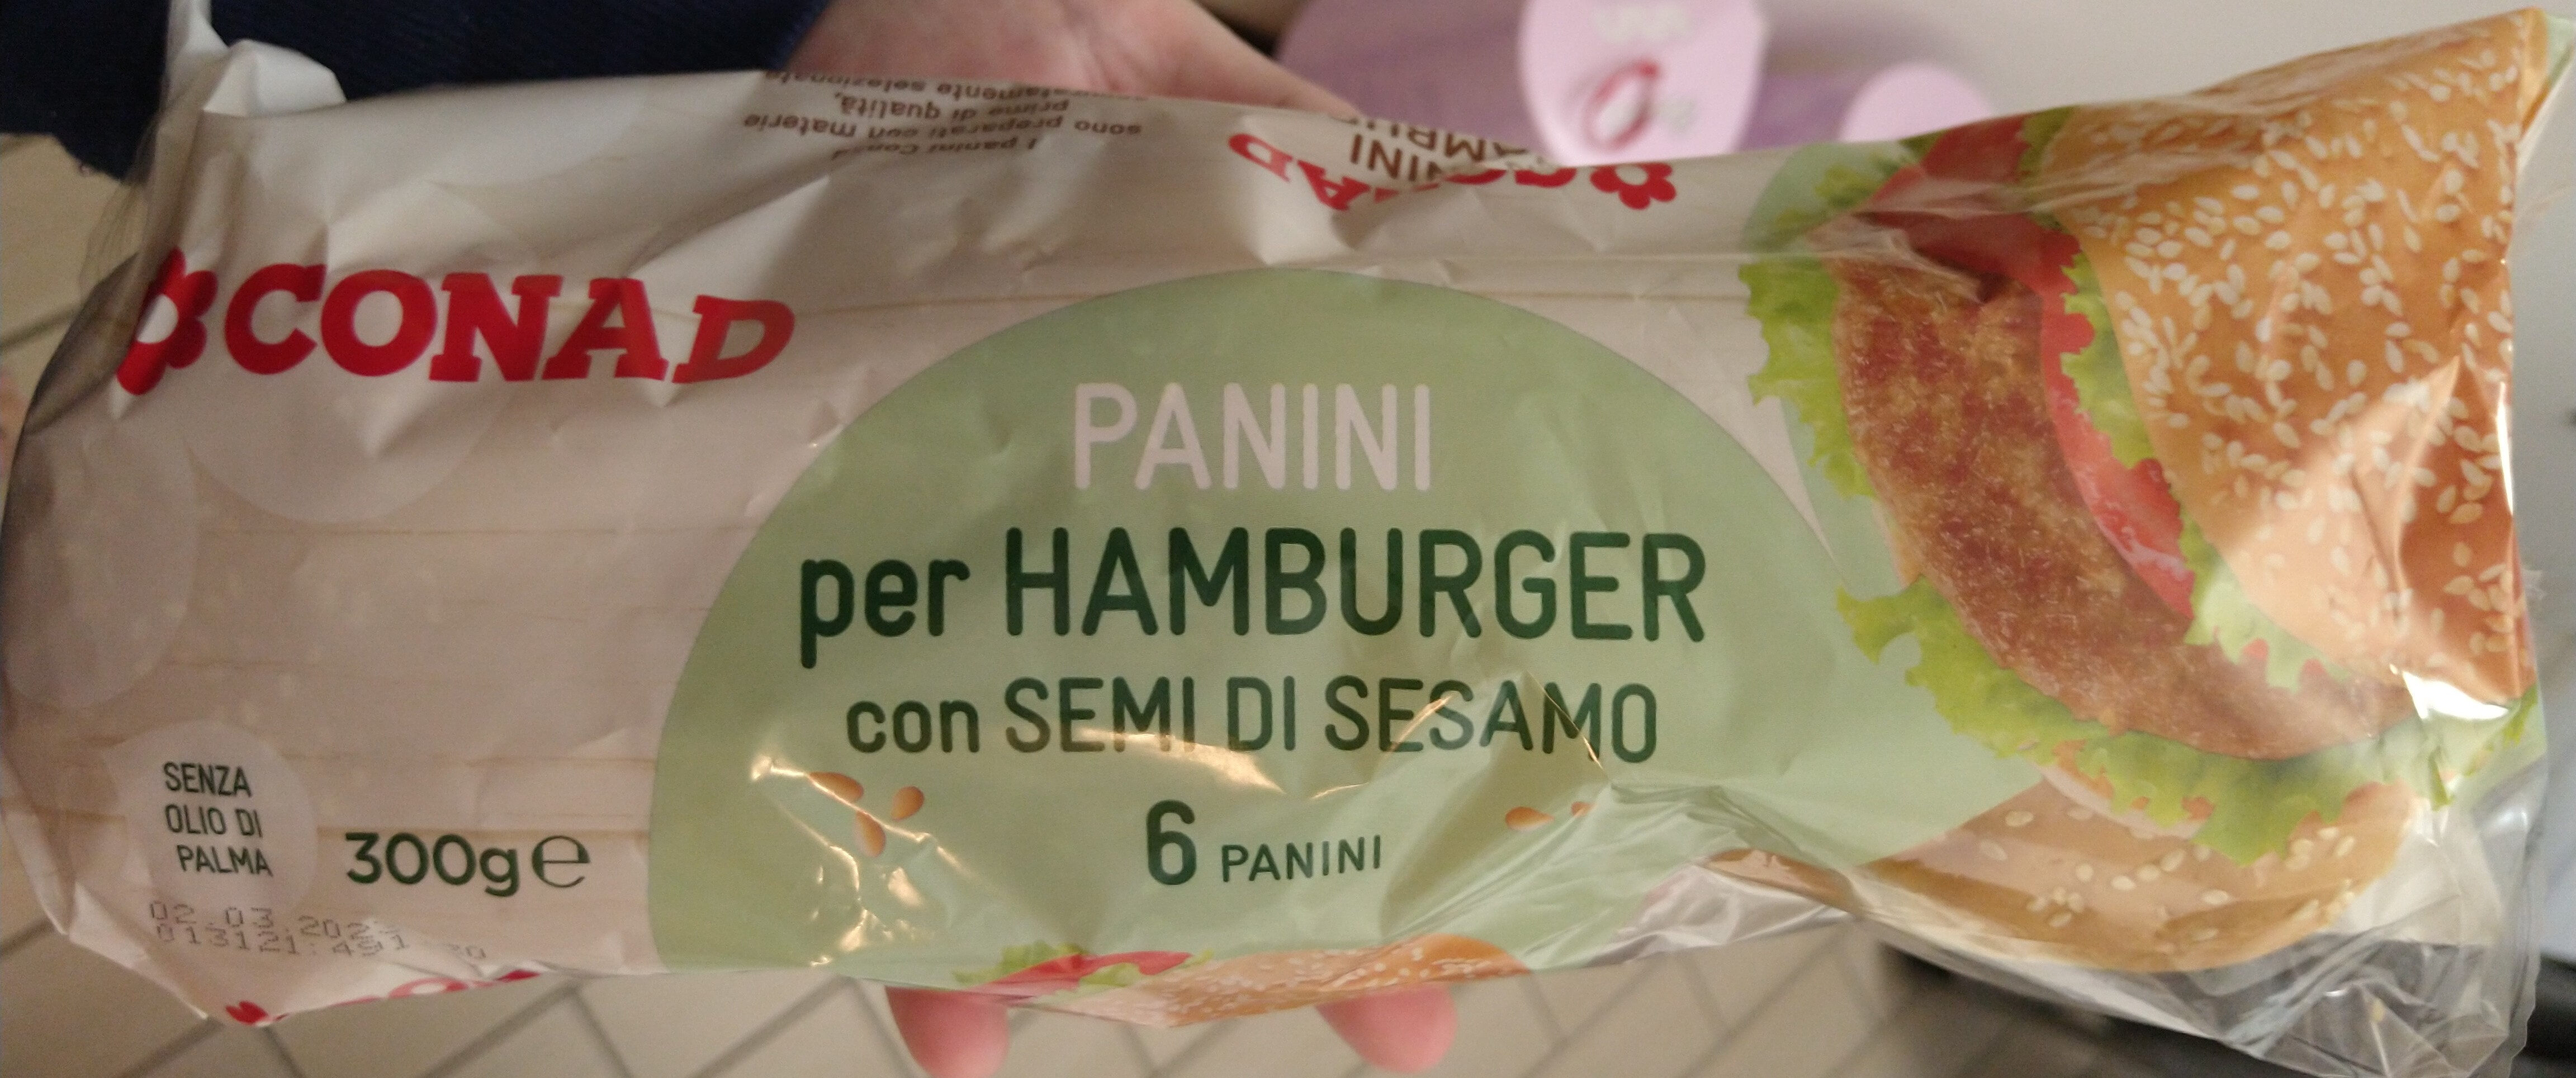 Panini per hamburger con semi di sesamo - Product - it